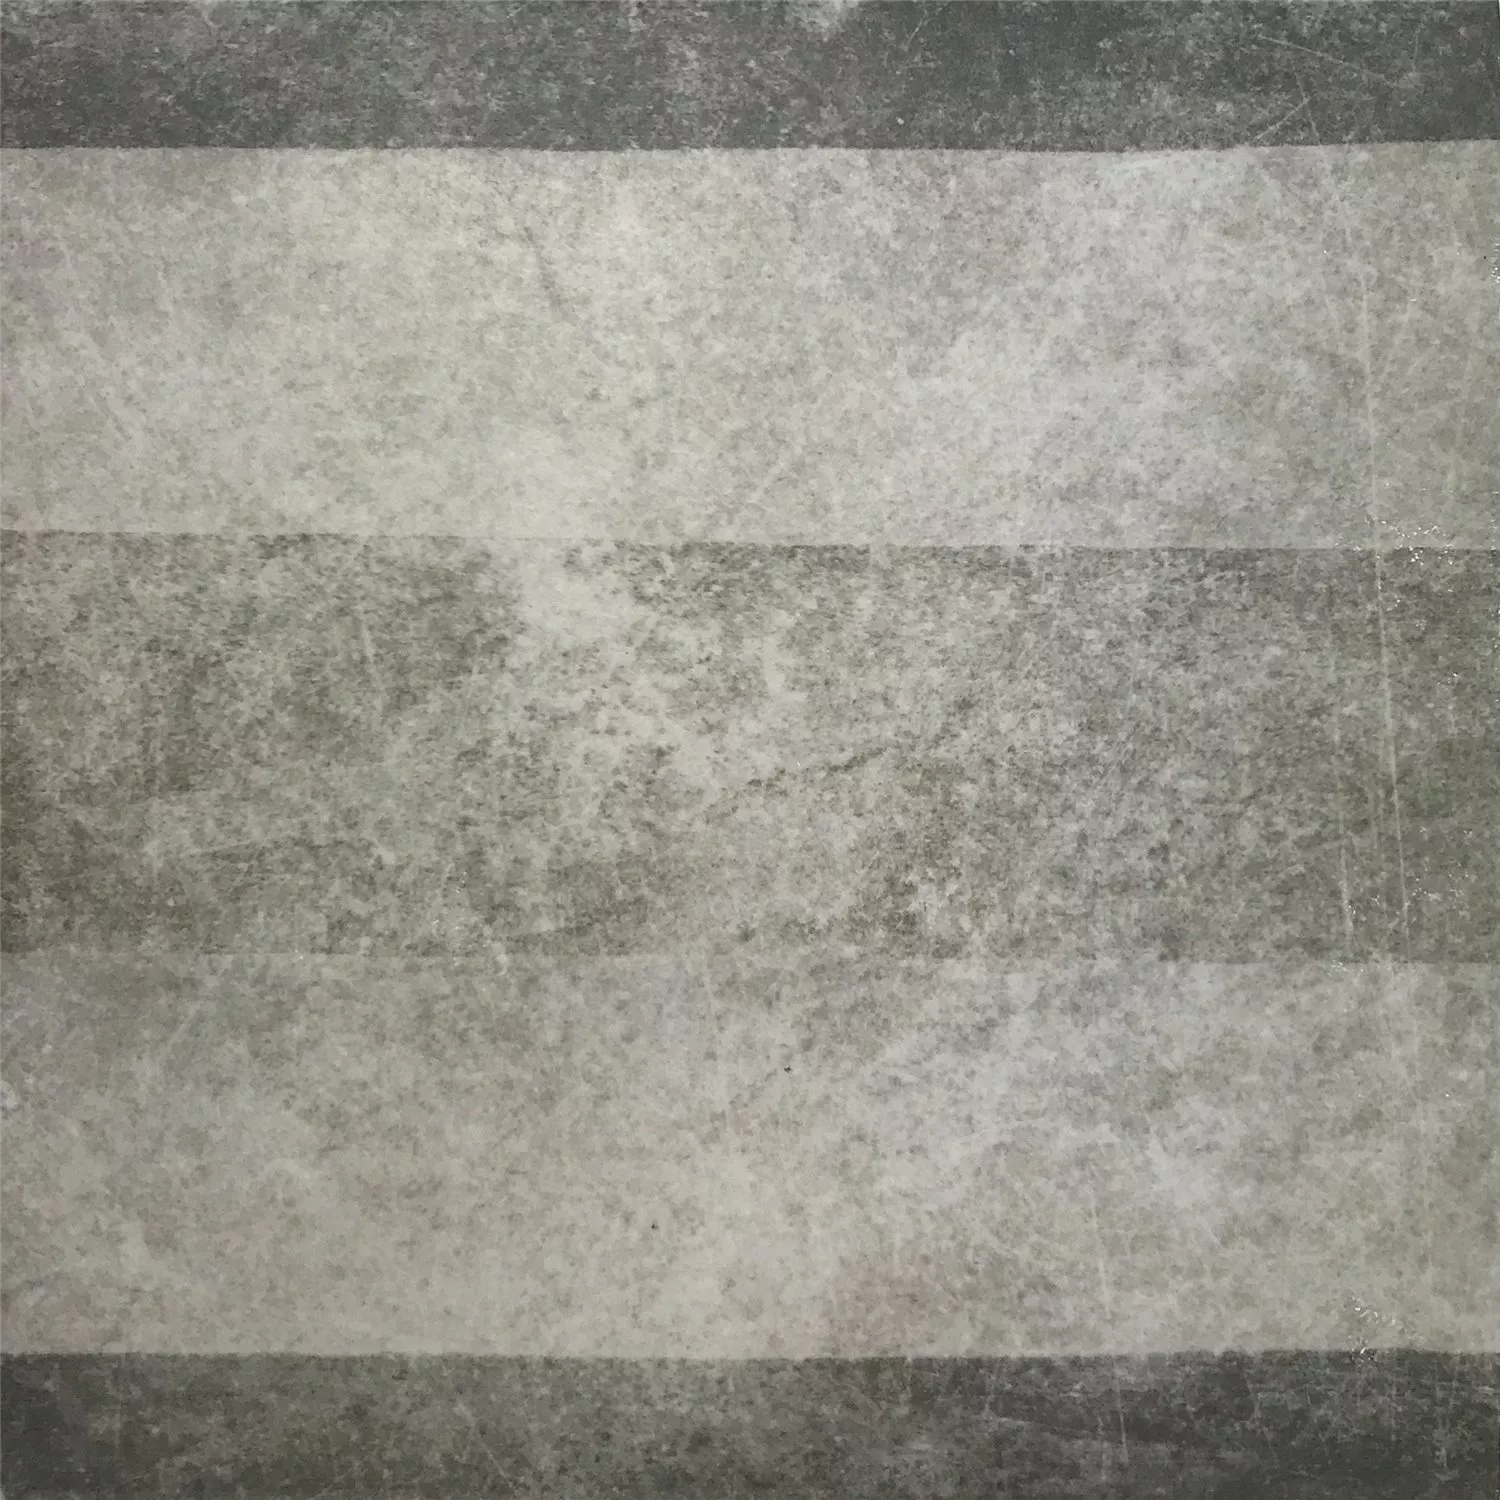 Sample Cement Tiles Optic Floor Tiles Decor Milano Grey Mix